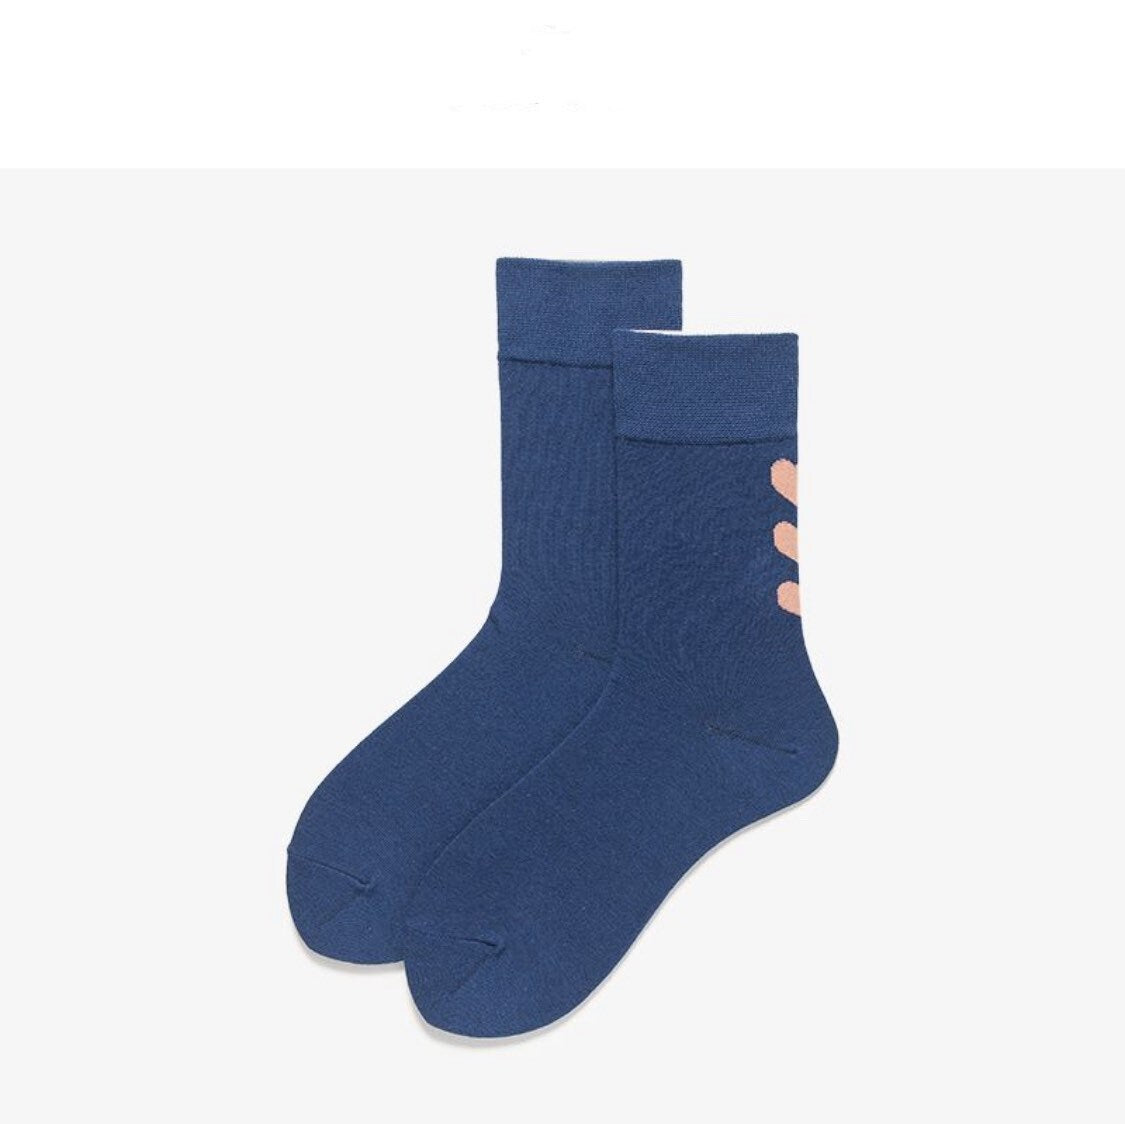 Miss June’s, Women’s 1 pair Cute cotton socks,colorful socks,cool socks,patterned socks,cotton socks,casual socks